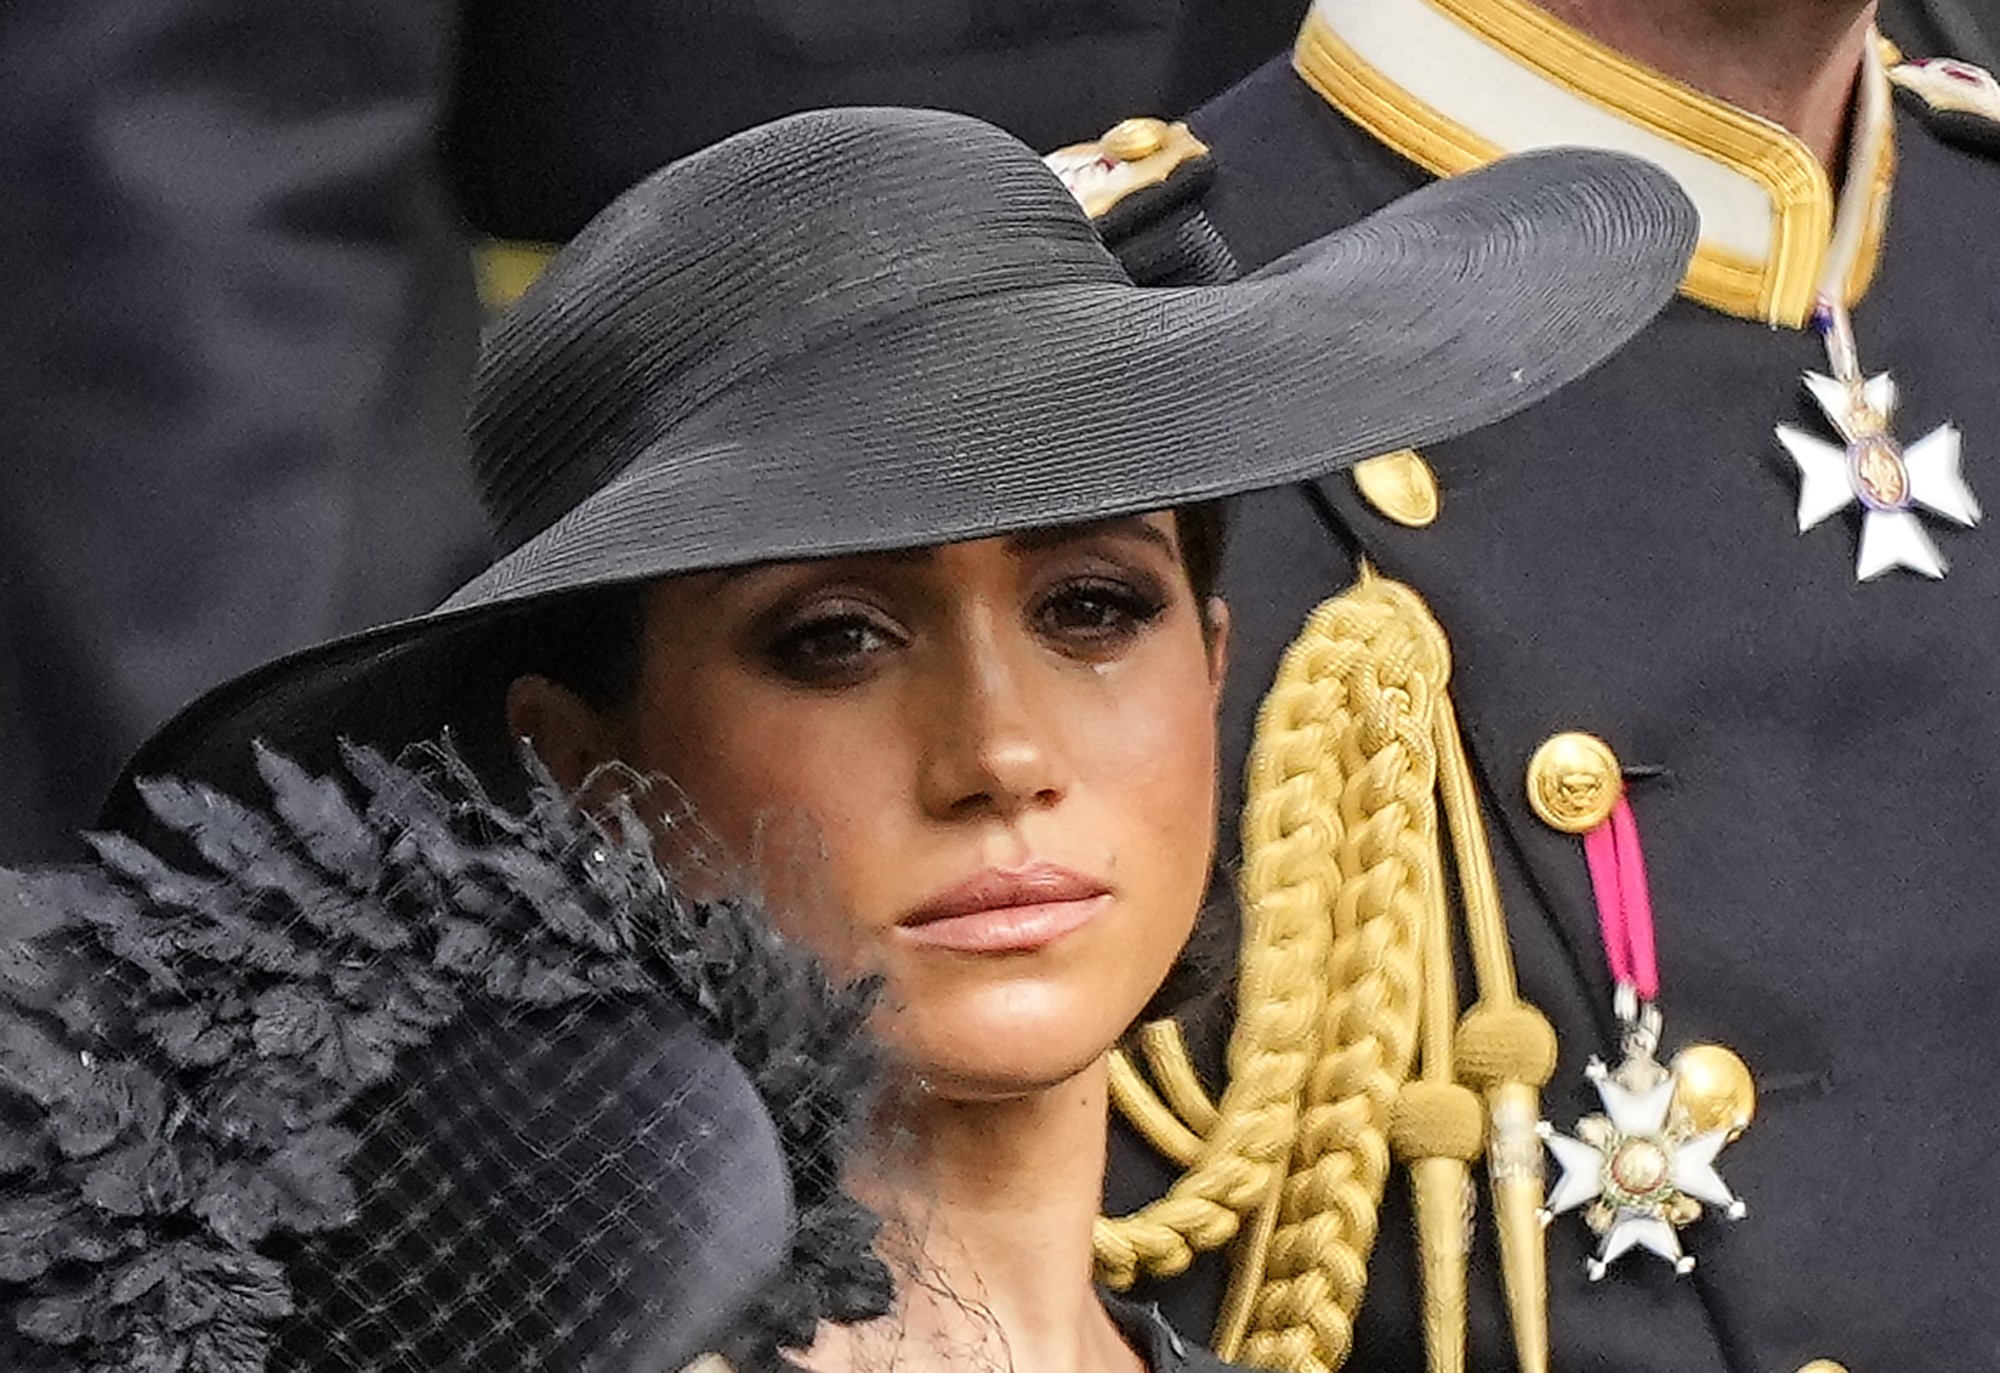 Meghan, Duchess of Sussex has a tear drop down her cheek